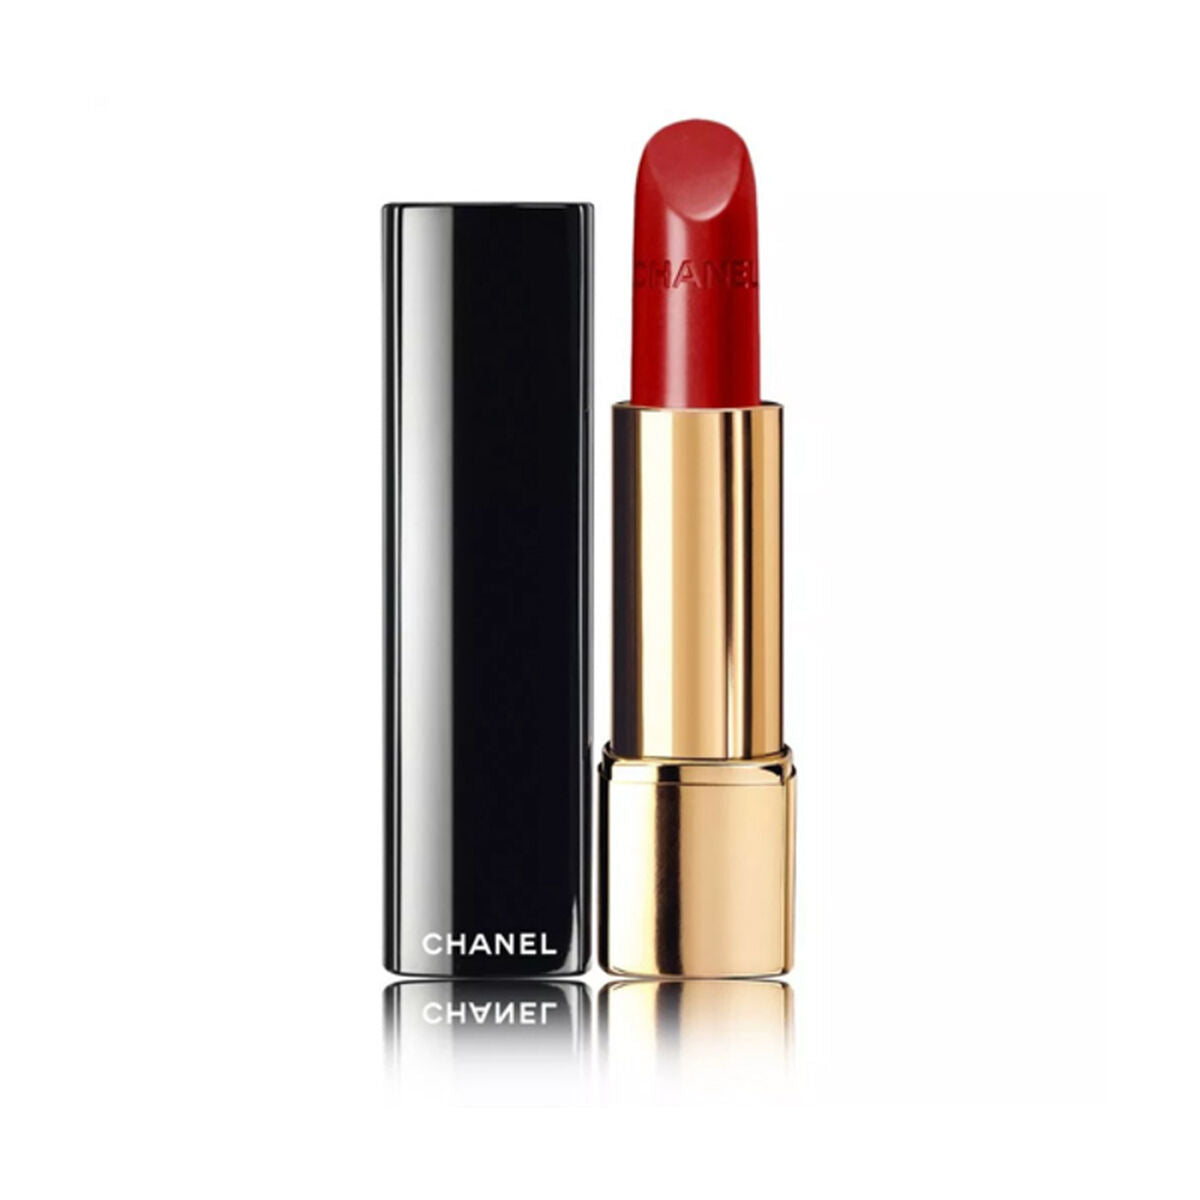 Kaufe Lippenstift Rouge Allure Chanel bei AWK Flagship um € 47.00